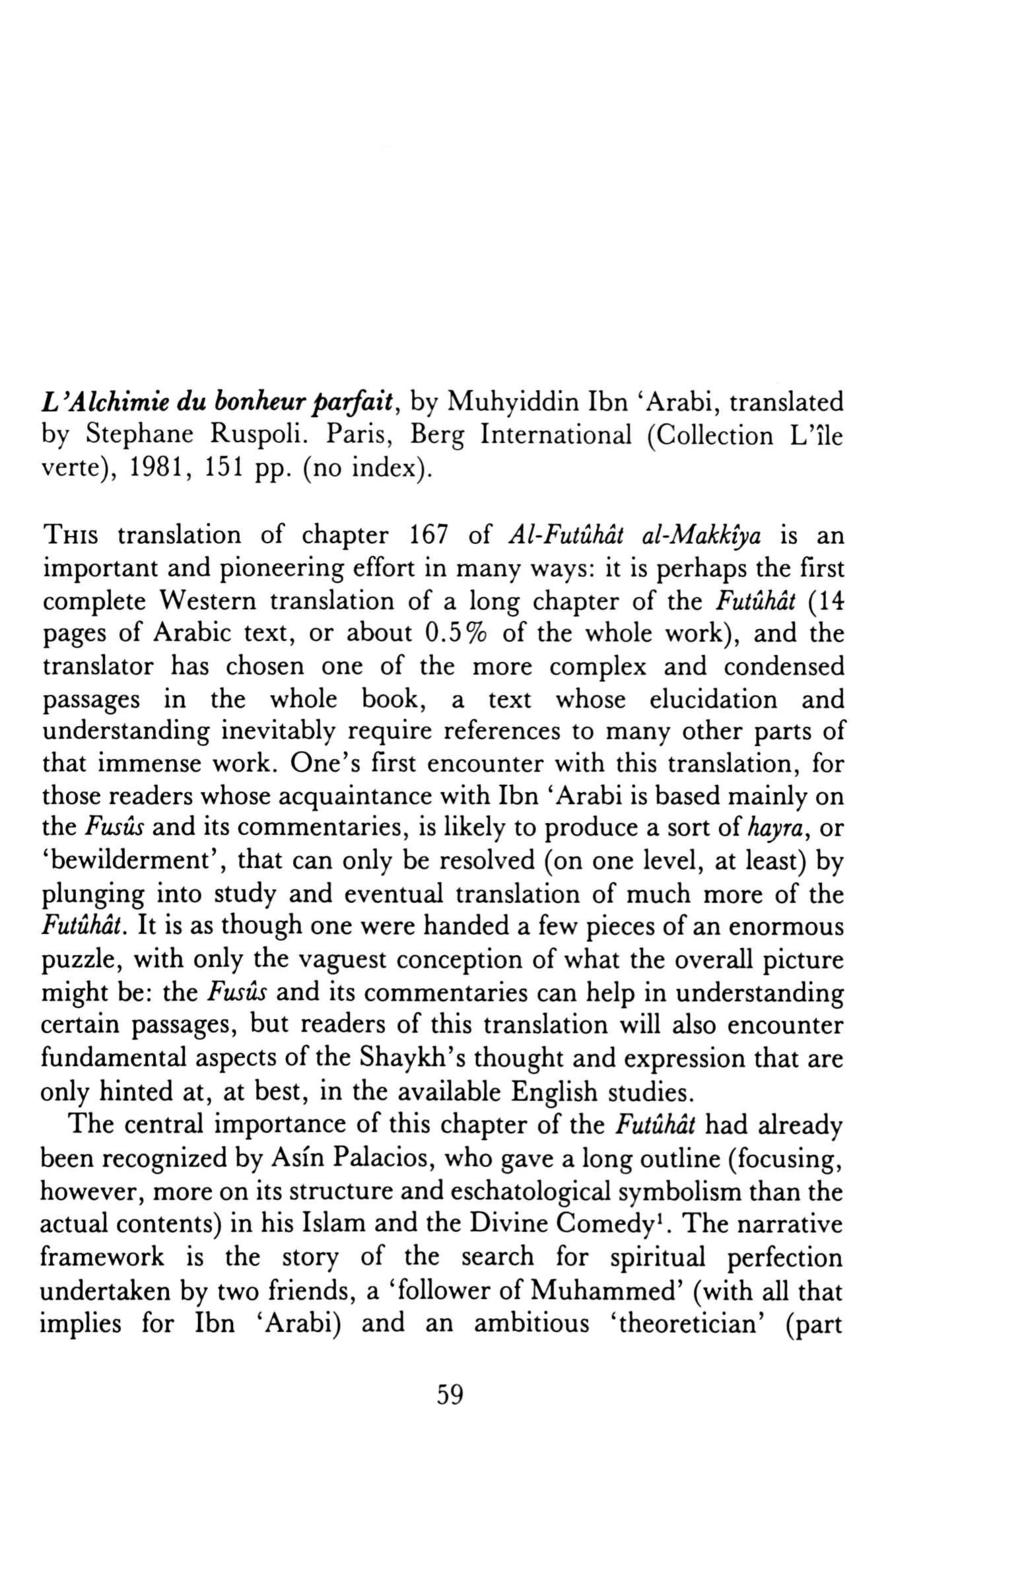 L'Alchimie du bonheur parfait, by Muhyiddin Ibn 'Arabi, translated by Stephane Ruspoli. Paris, Berg International (Collection L'ile verte), 1981, 151 pp. (no index).